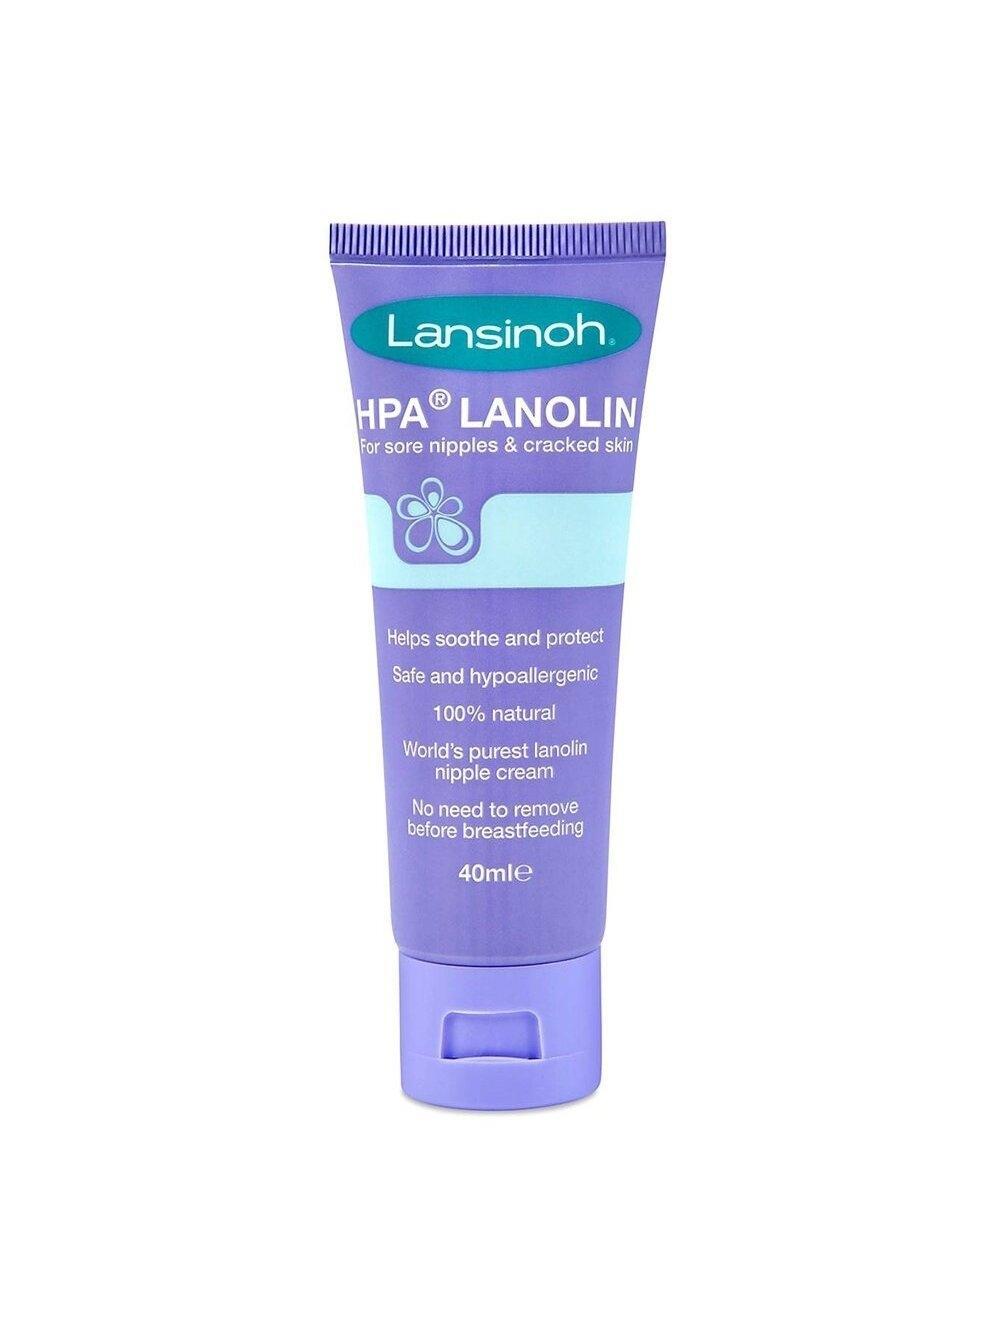 https://www.nordbaby.com/products/images/g120000/121145/creams-lansinoh-violet-lansinoh-hpa-lanolin-for-sore-nipples-cracked-skin-40ml-121145-78918.jpg